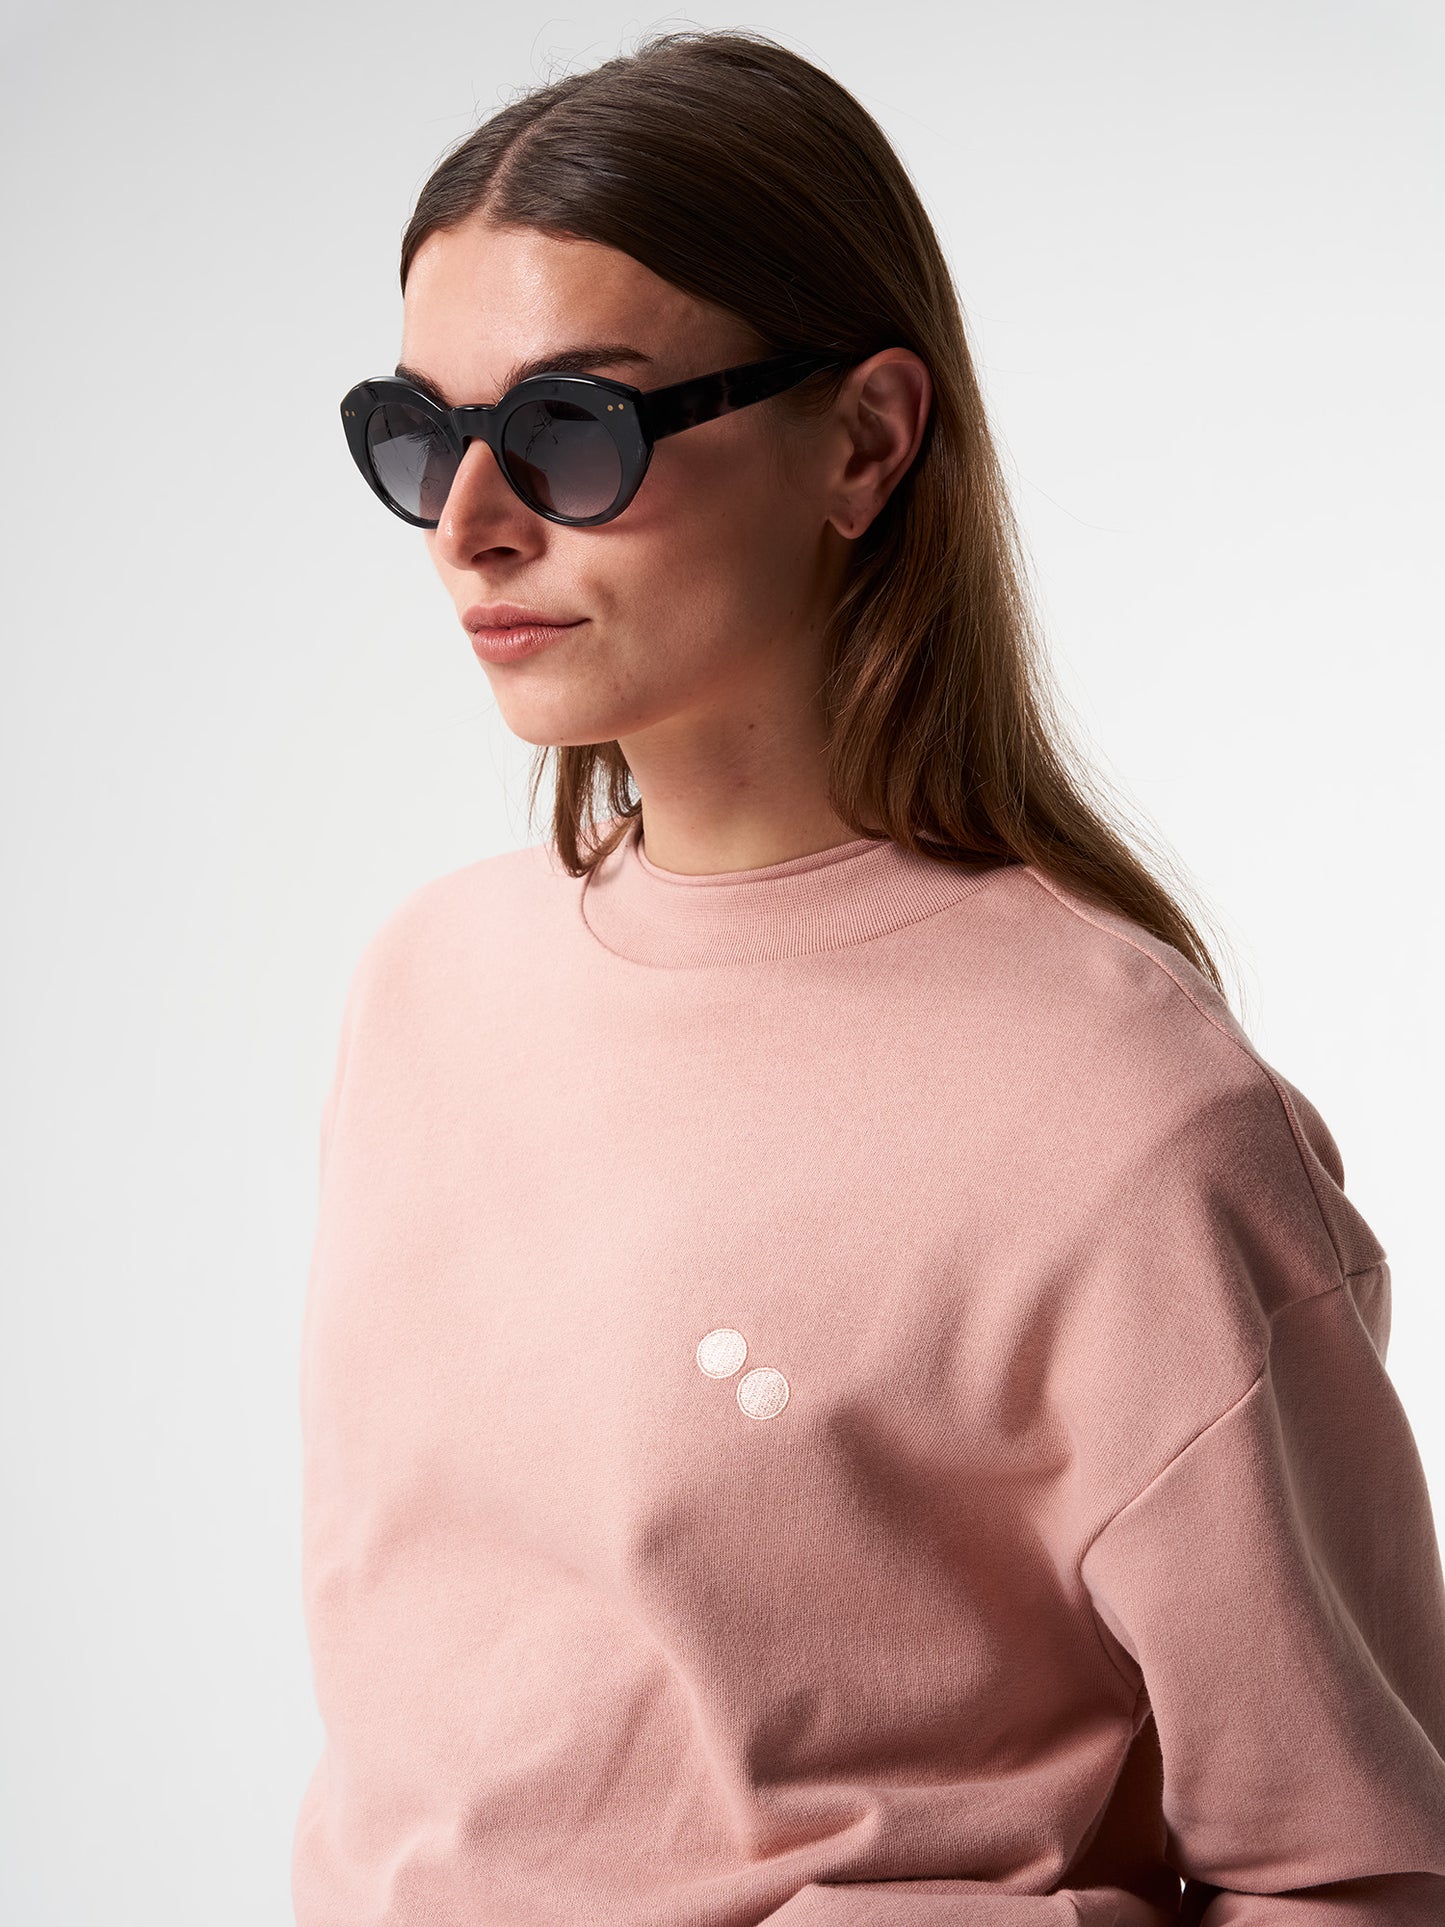 pinqponq-Sweatshirt-Unisex-Ash-Pink-model-closeup-front